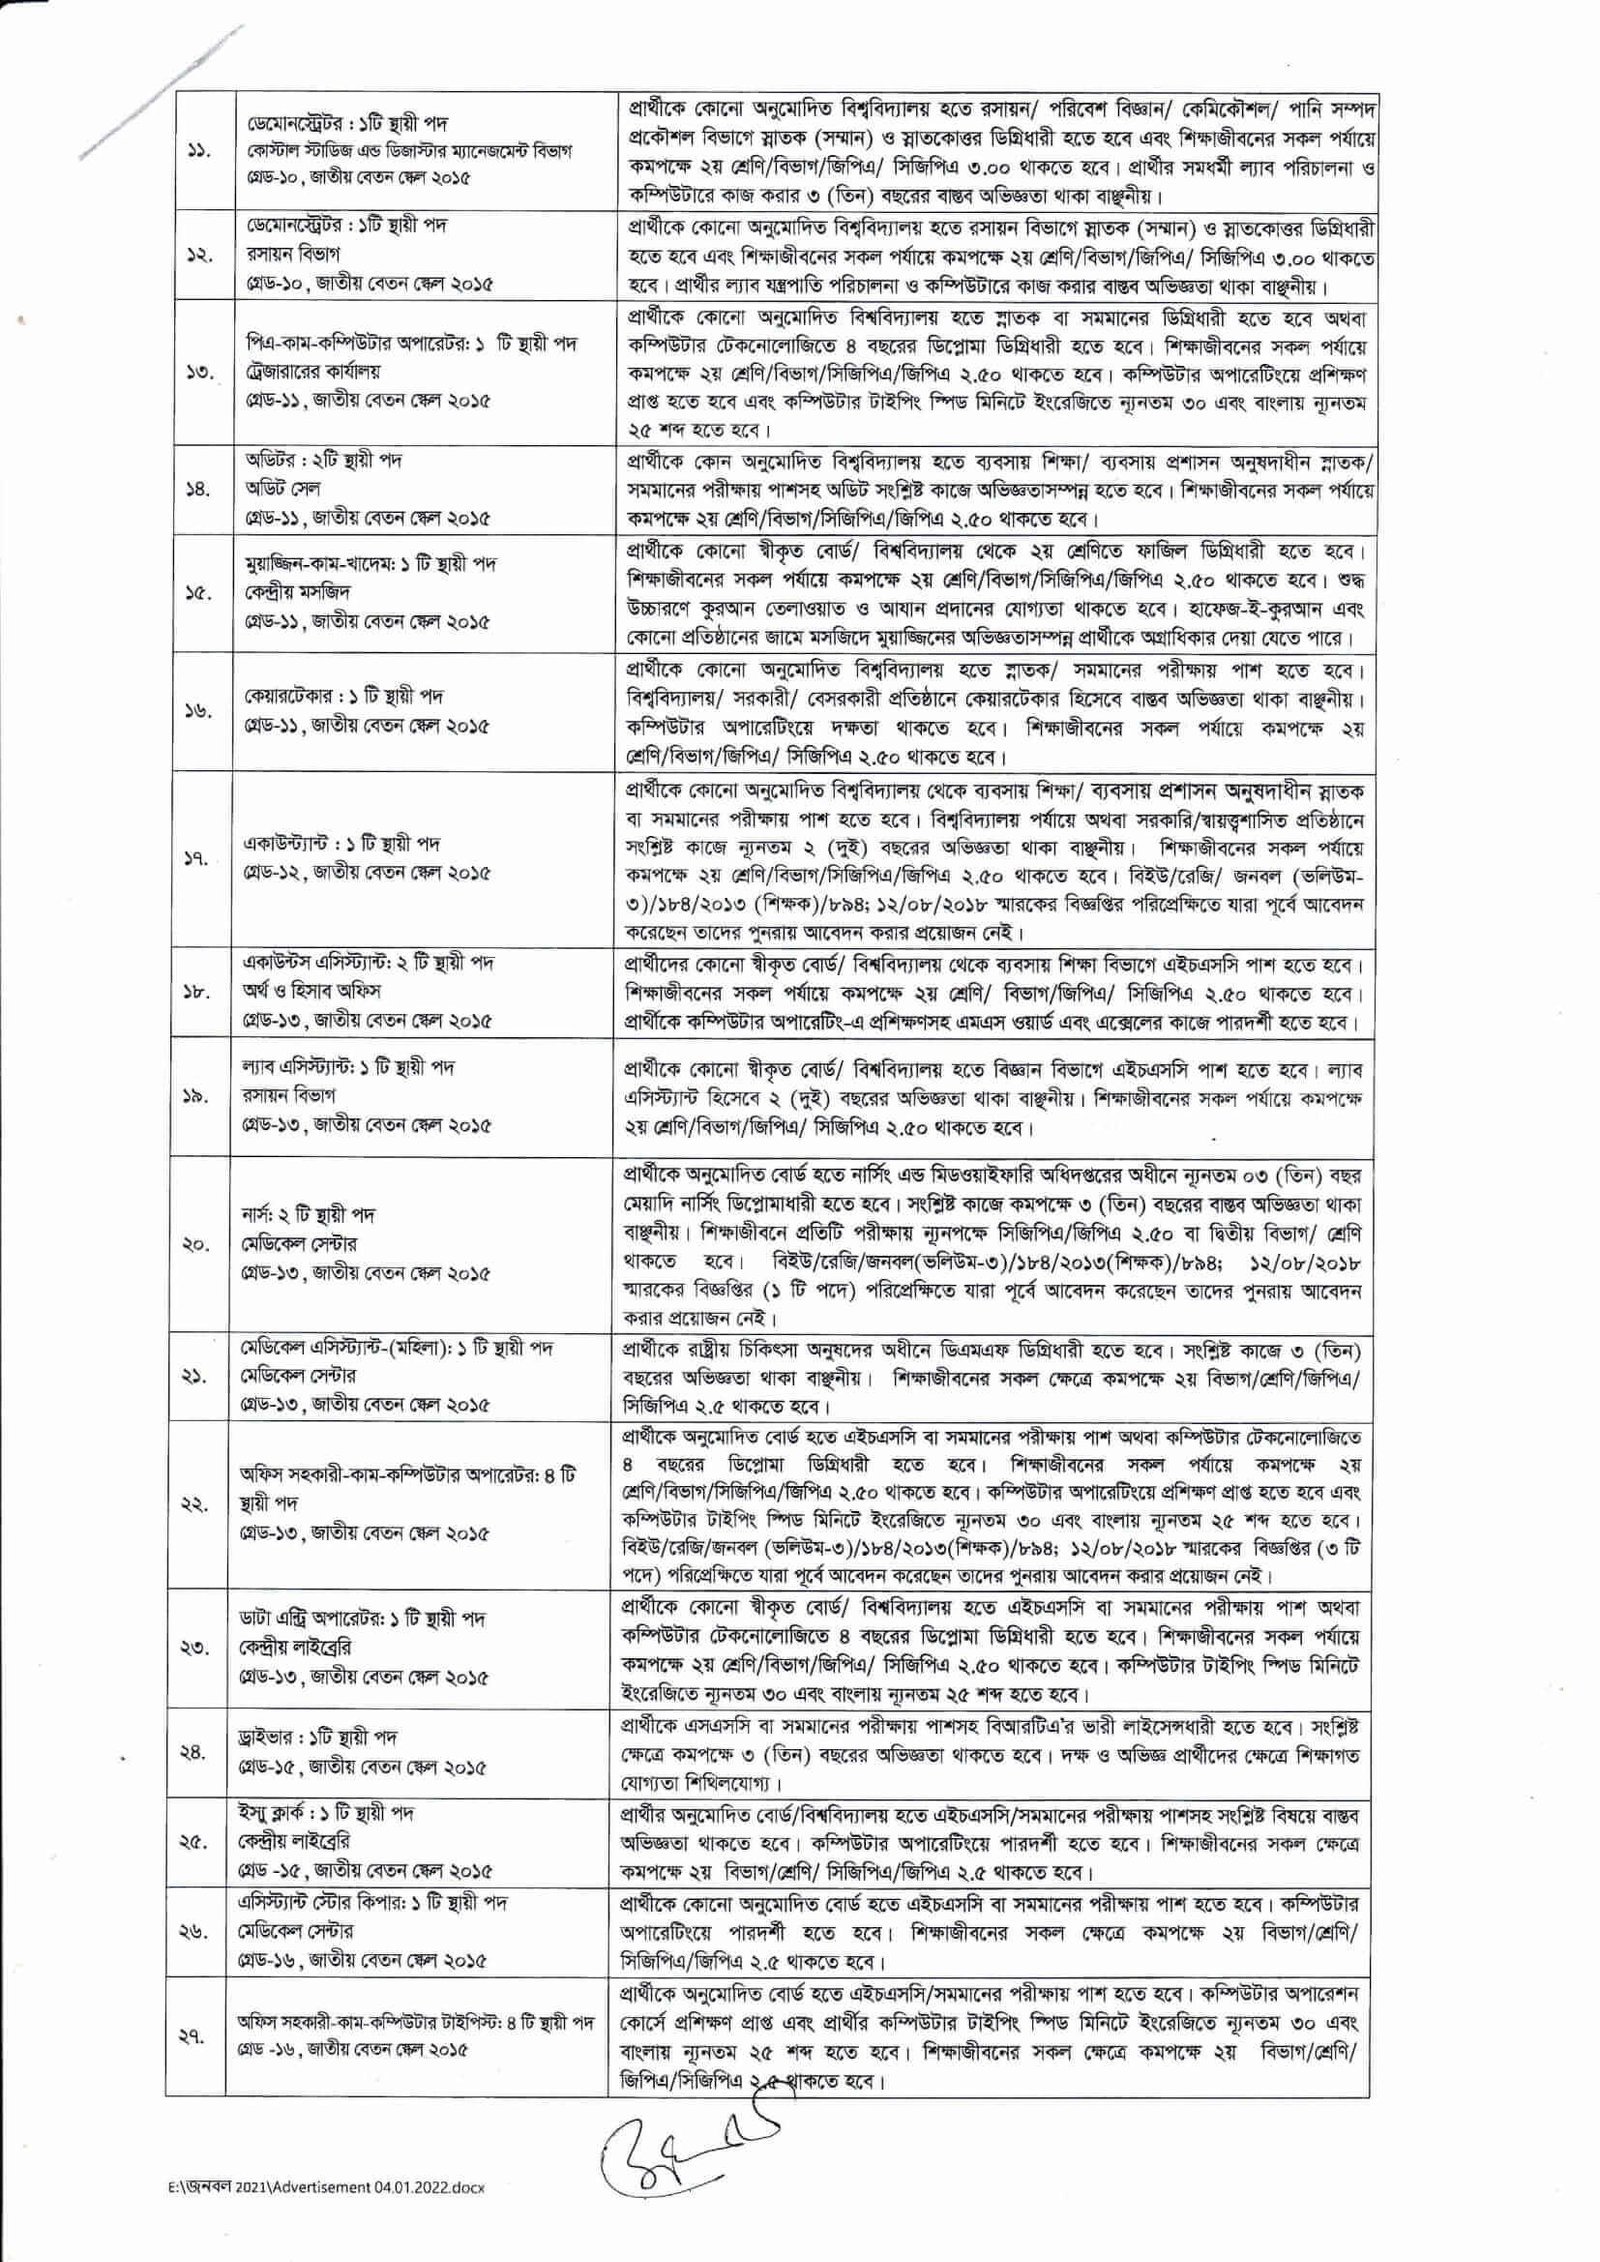 Barisal University Job Circular 2022 PDF & Image Download